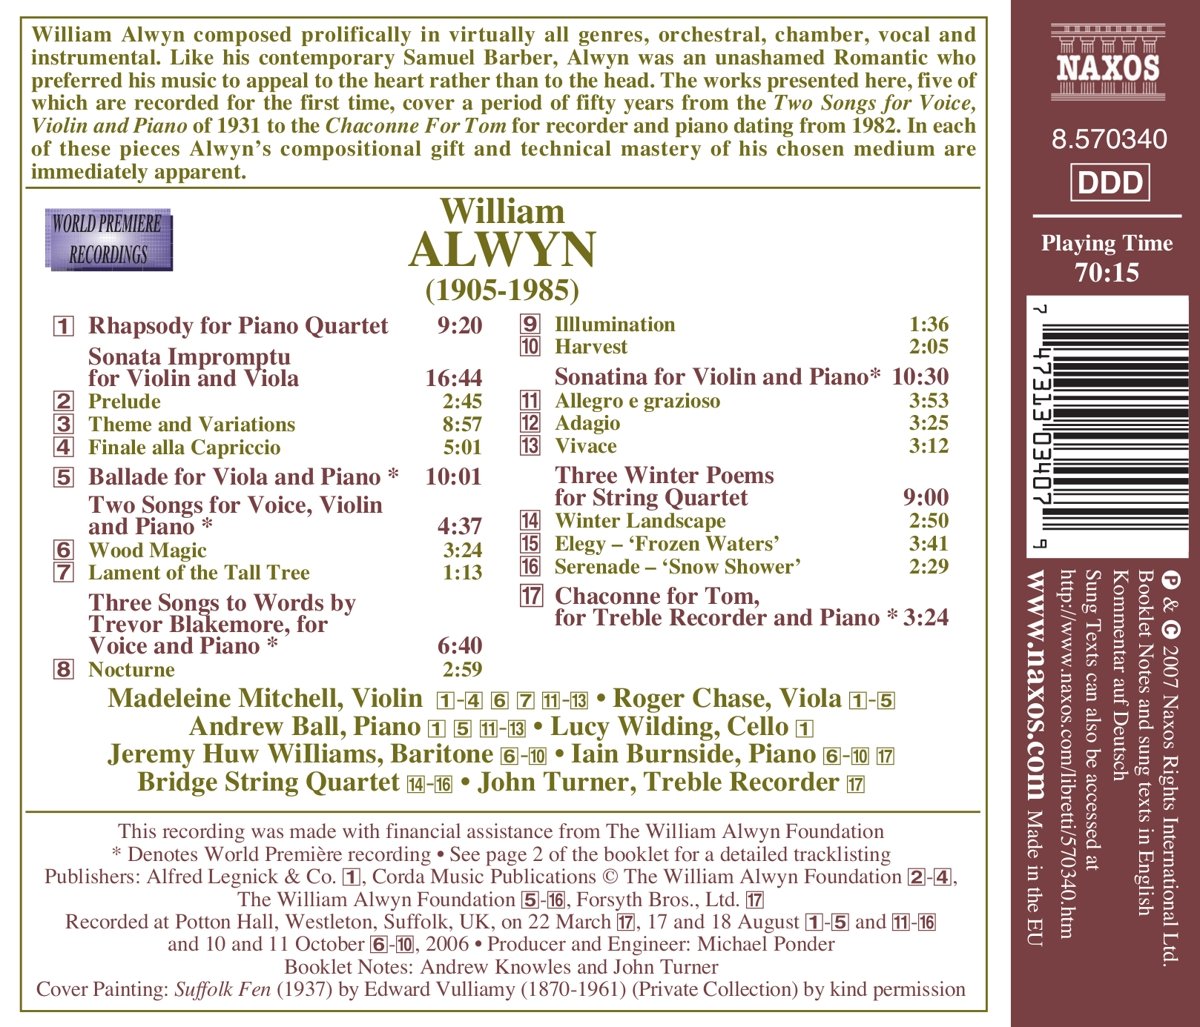 Bridge String Quartet 윌리암 올윈: 실내악 작품들과 가곡 (William Alwyn: Chamber Music and Songs) 